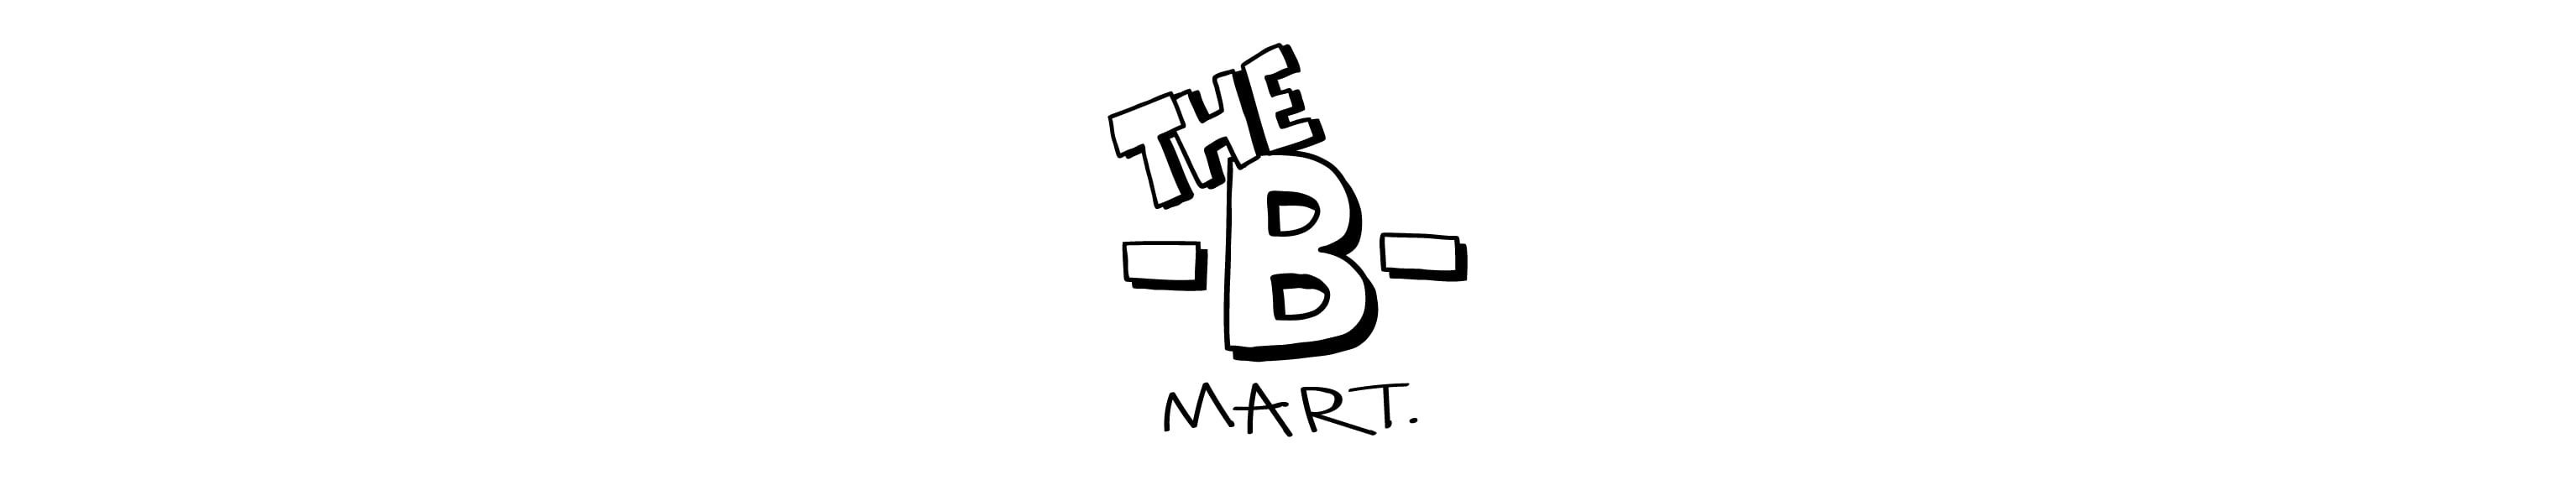 THE-B-MART